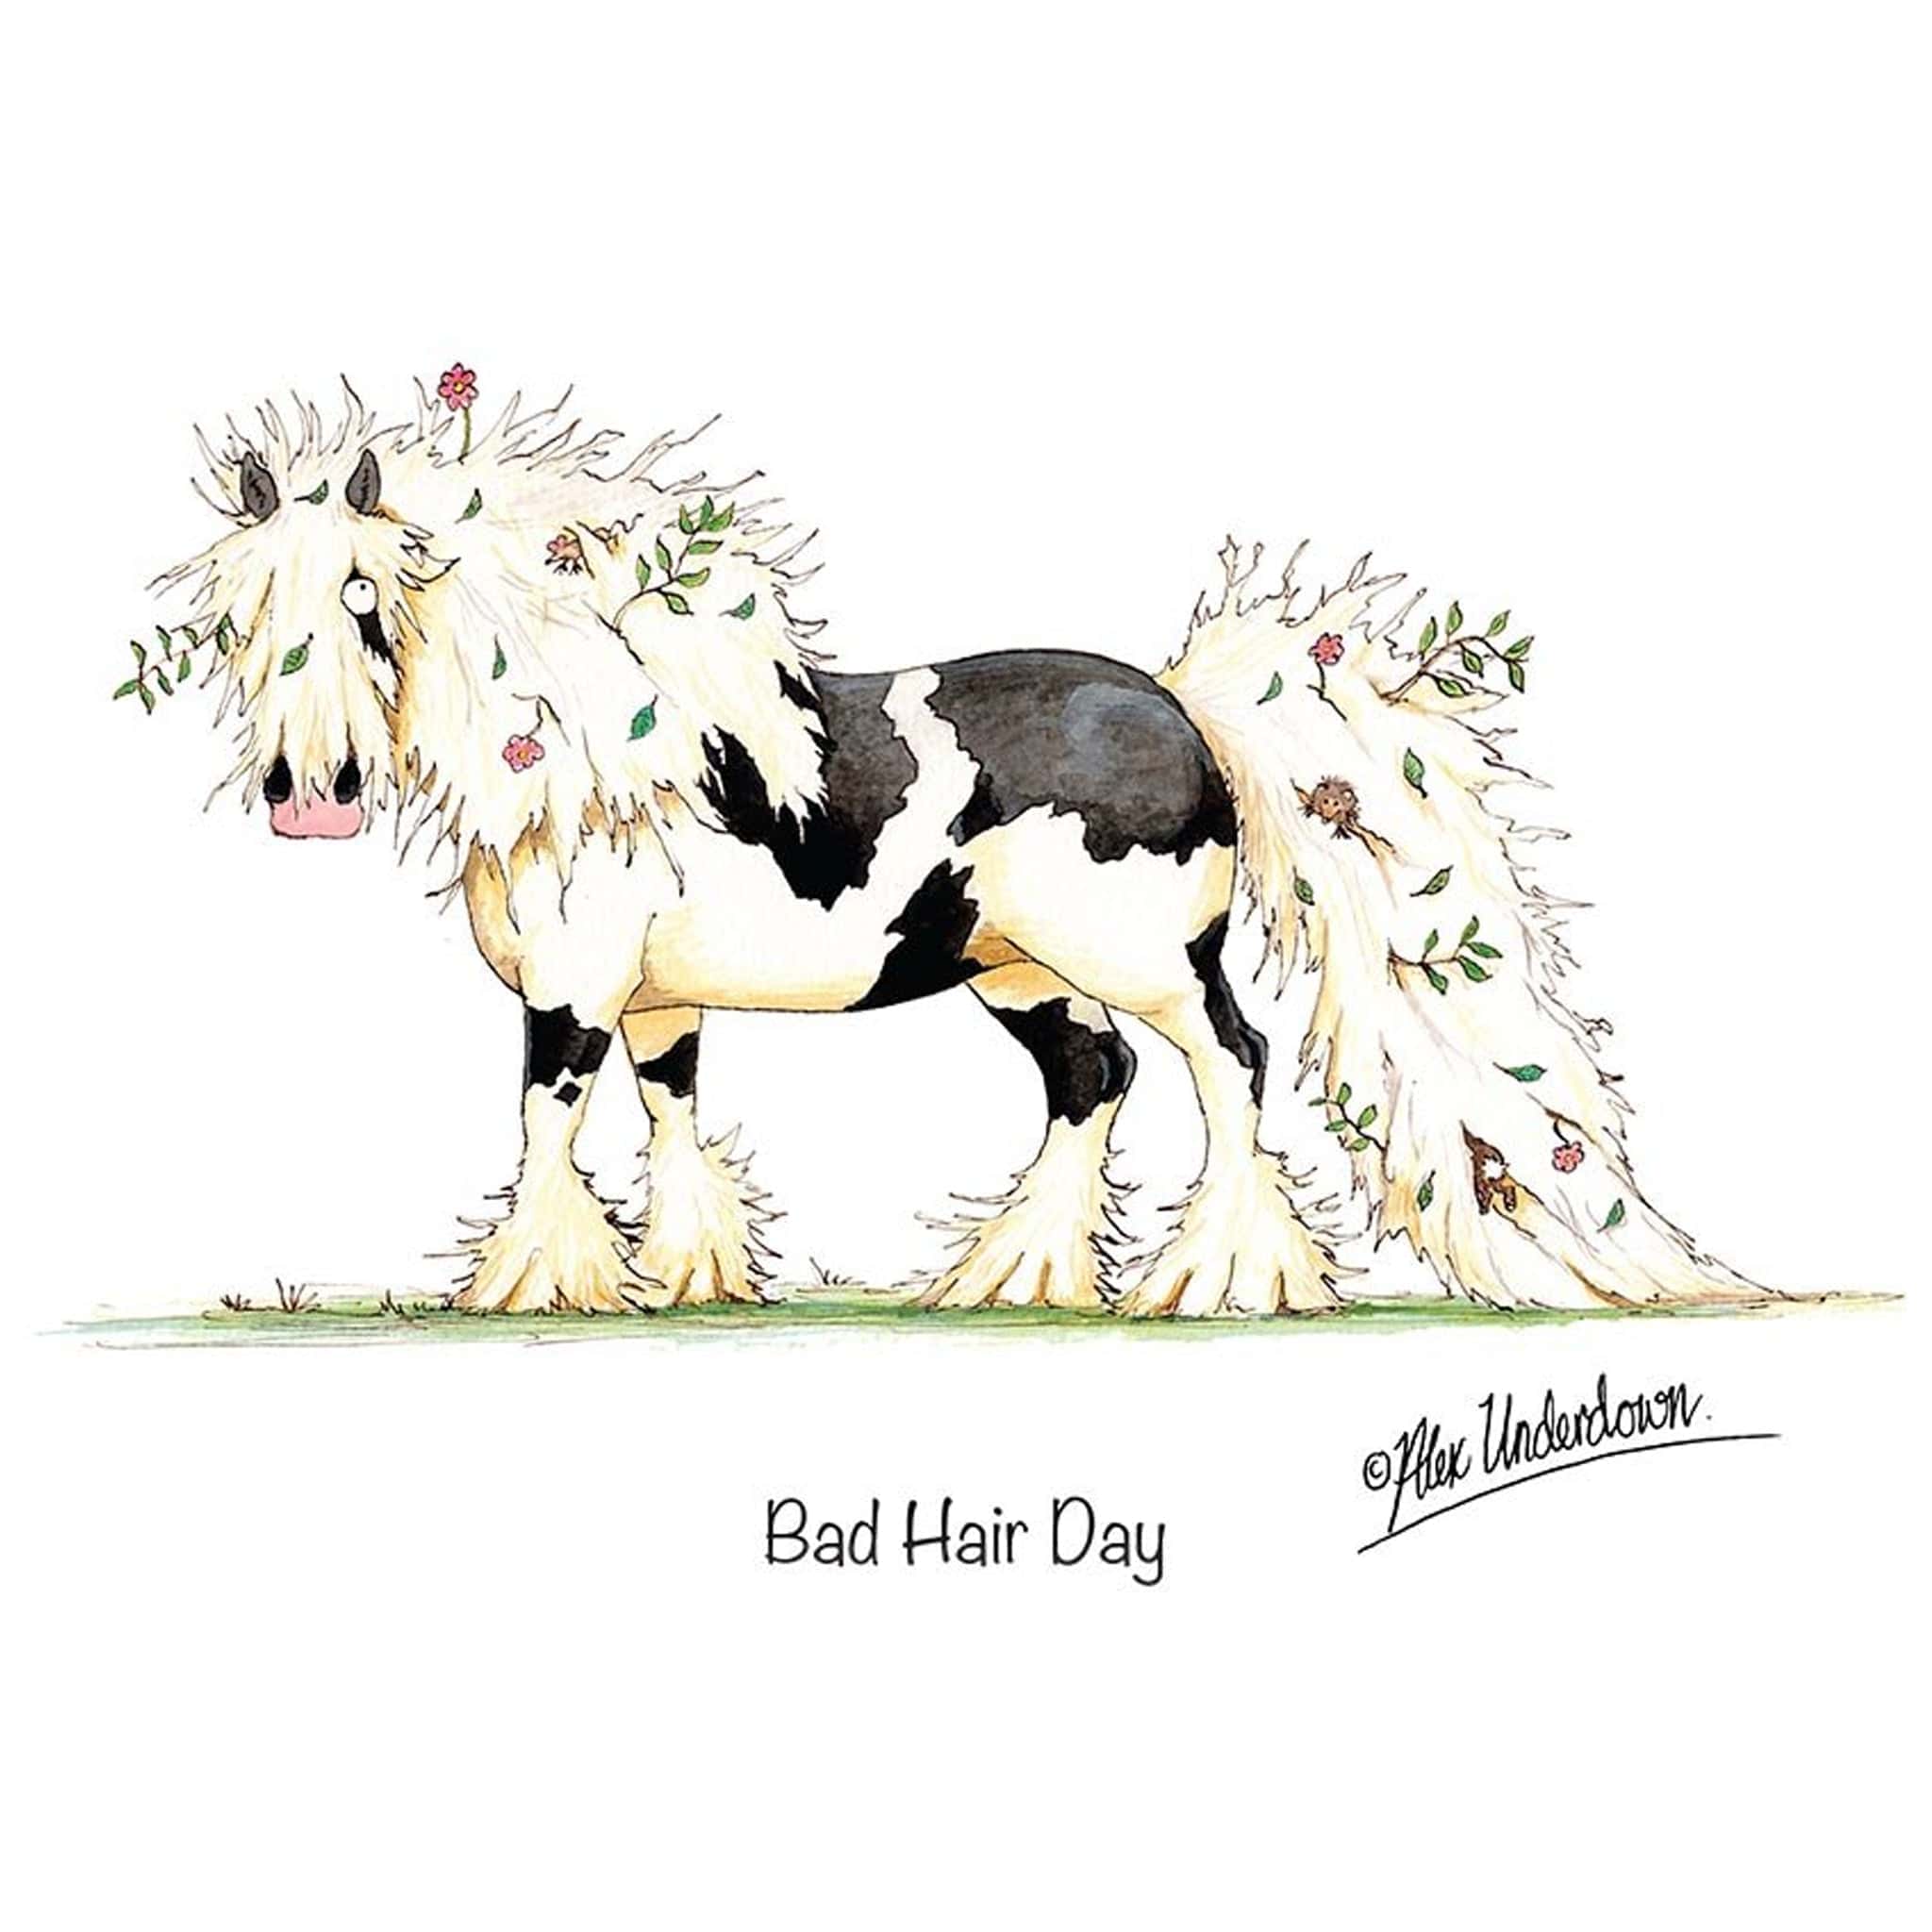 Bad Hair Day Greeting Card ALUNBADHGC01